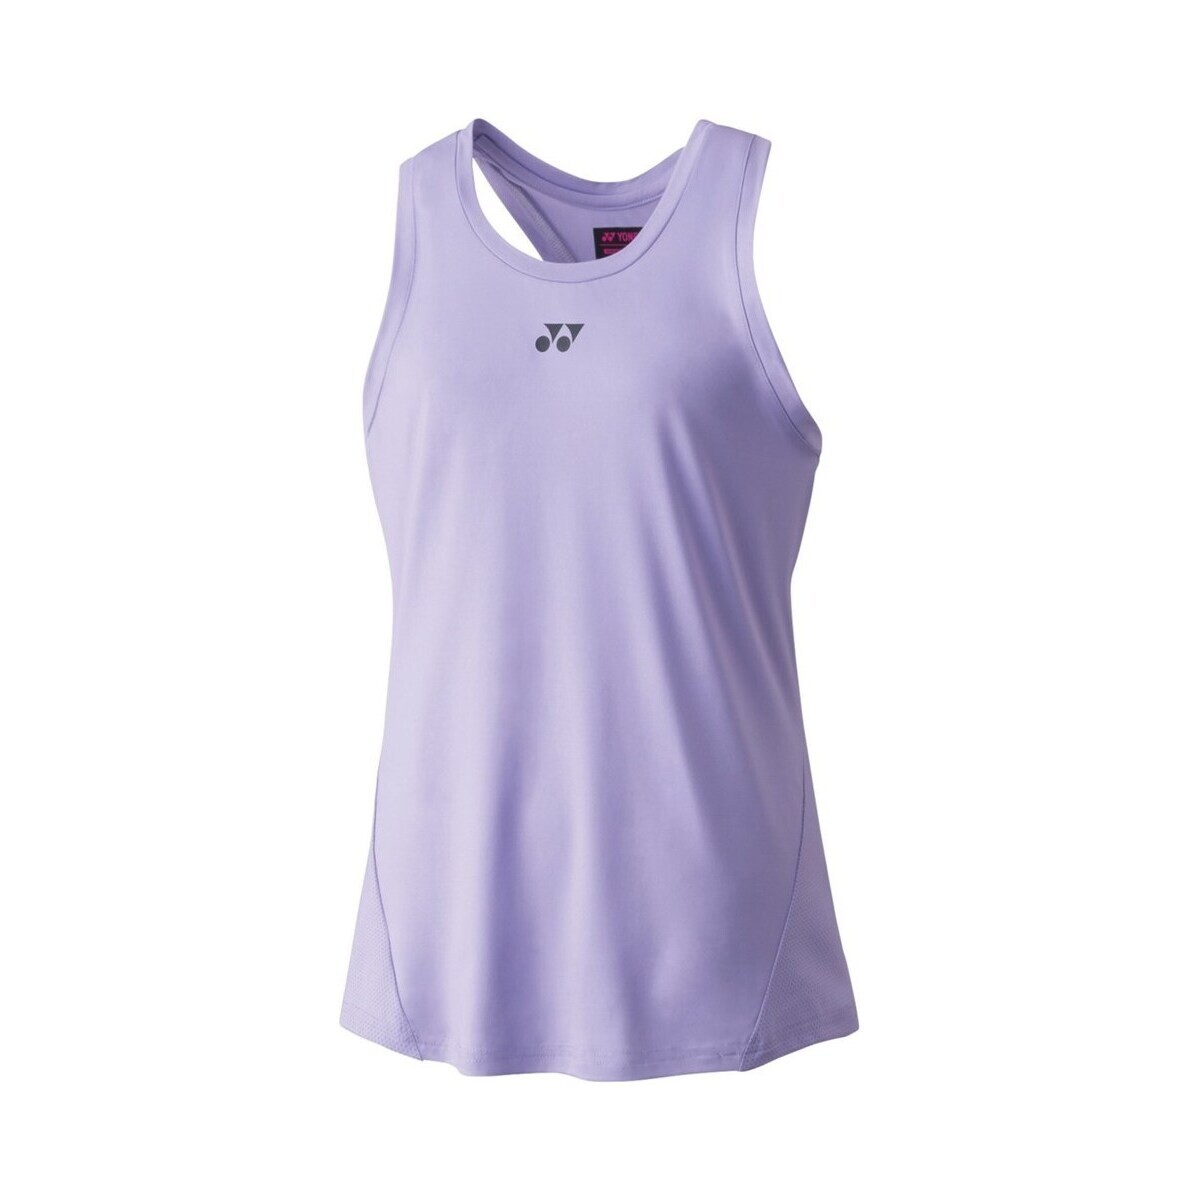 textil Dam T-shirts Yonex 16626MP Violett